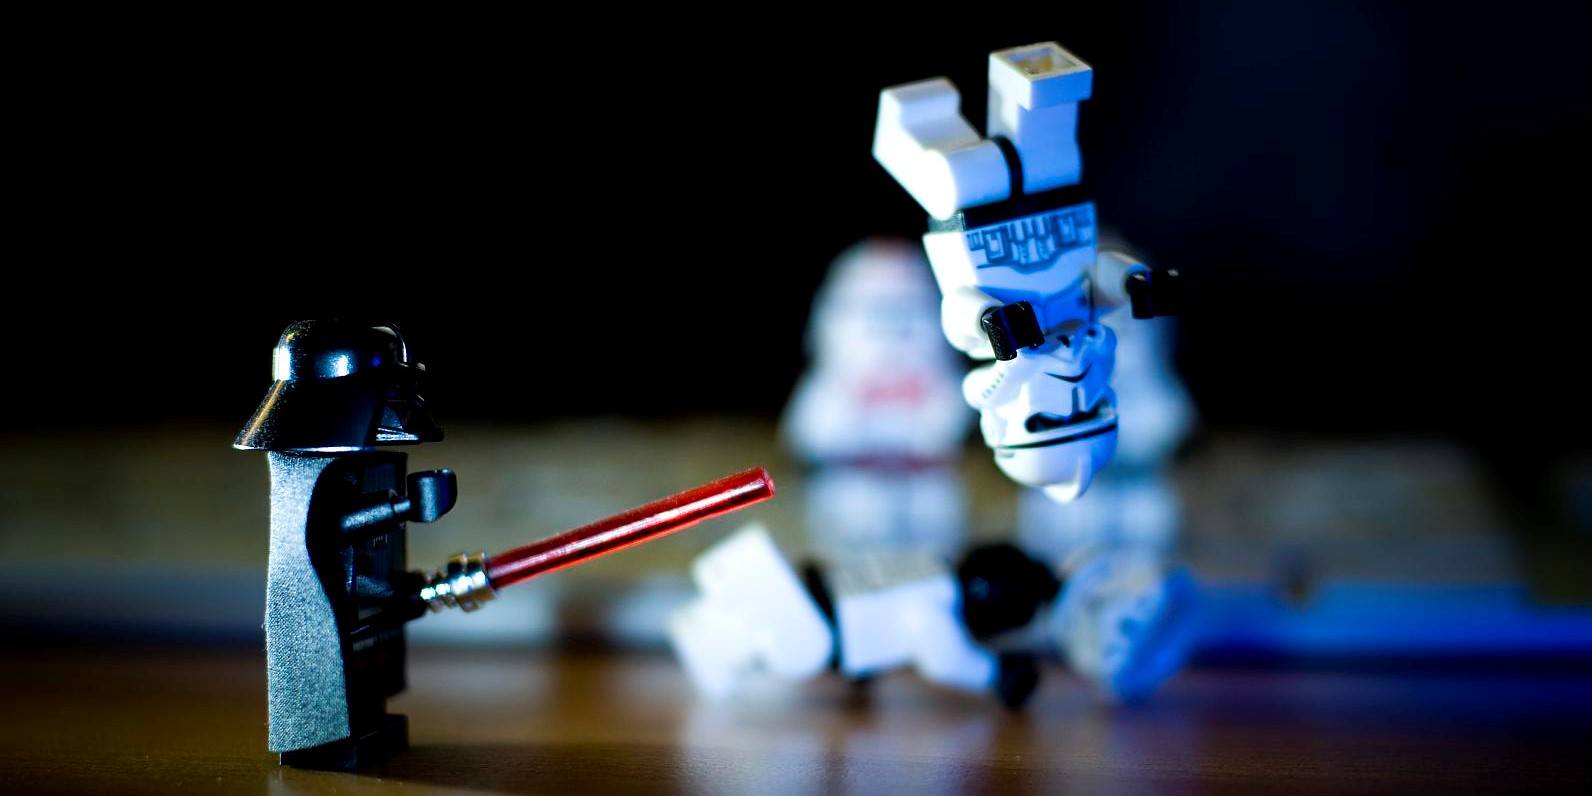 A cool shot of Star Wars LEGOs